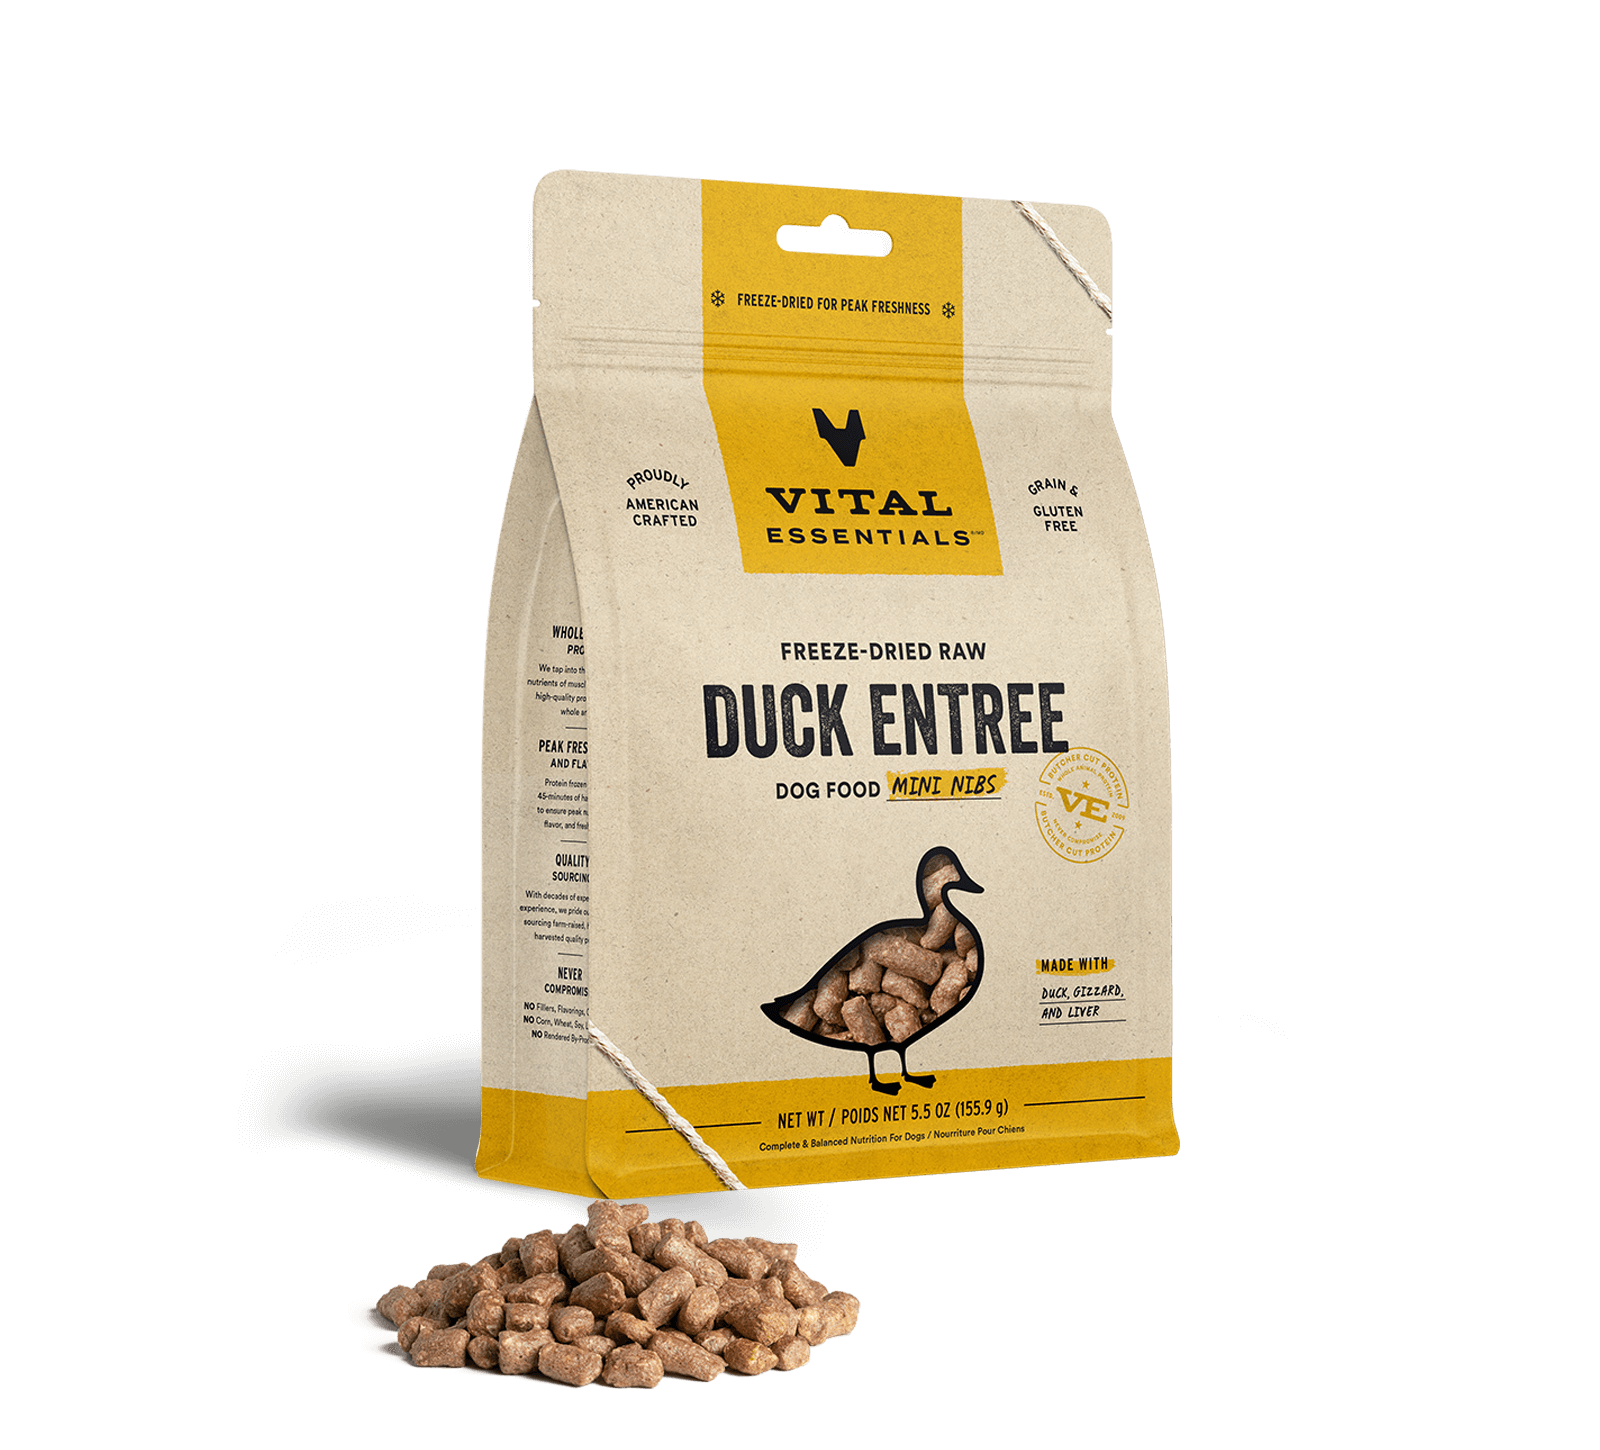 Vital Essentials Freeze-Dried Raw Duck Entree Dog Food Mini Nibs, 5.5 oz - Health/First Aid